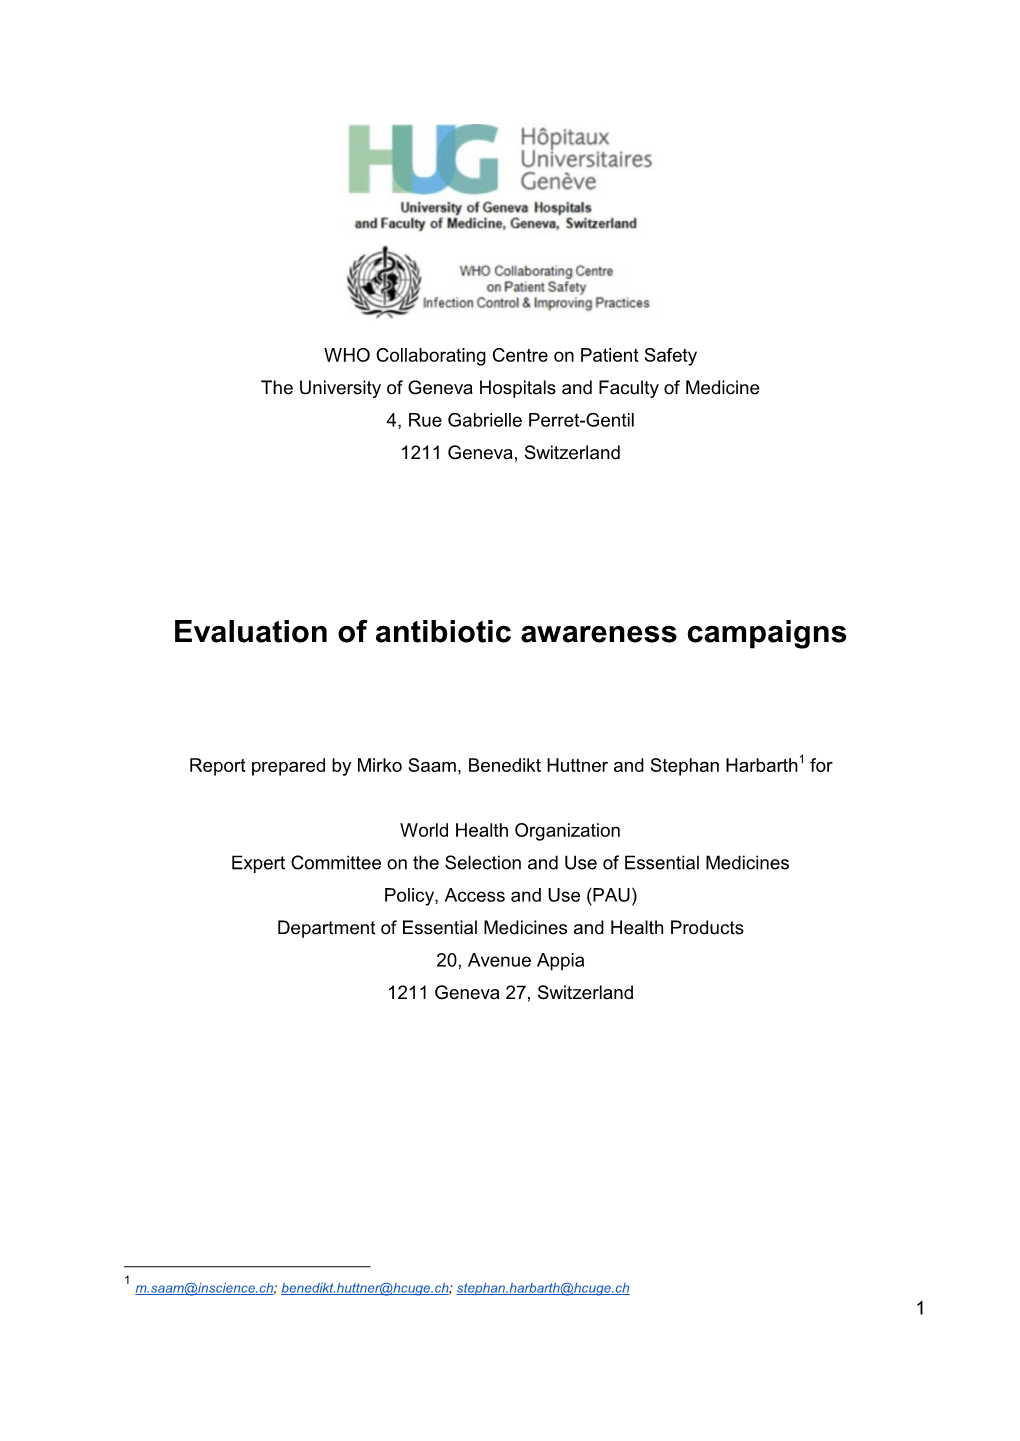 Evaluation of Antibiotic Awareness Campaigns